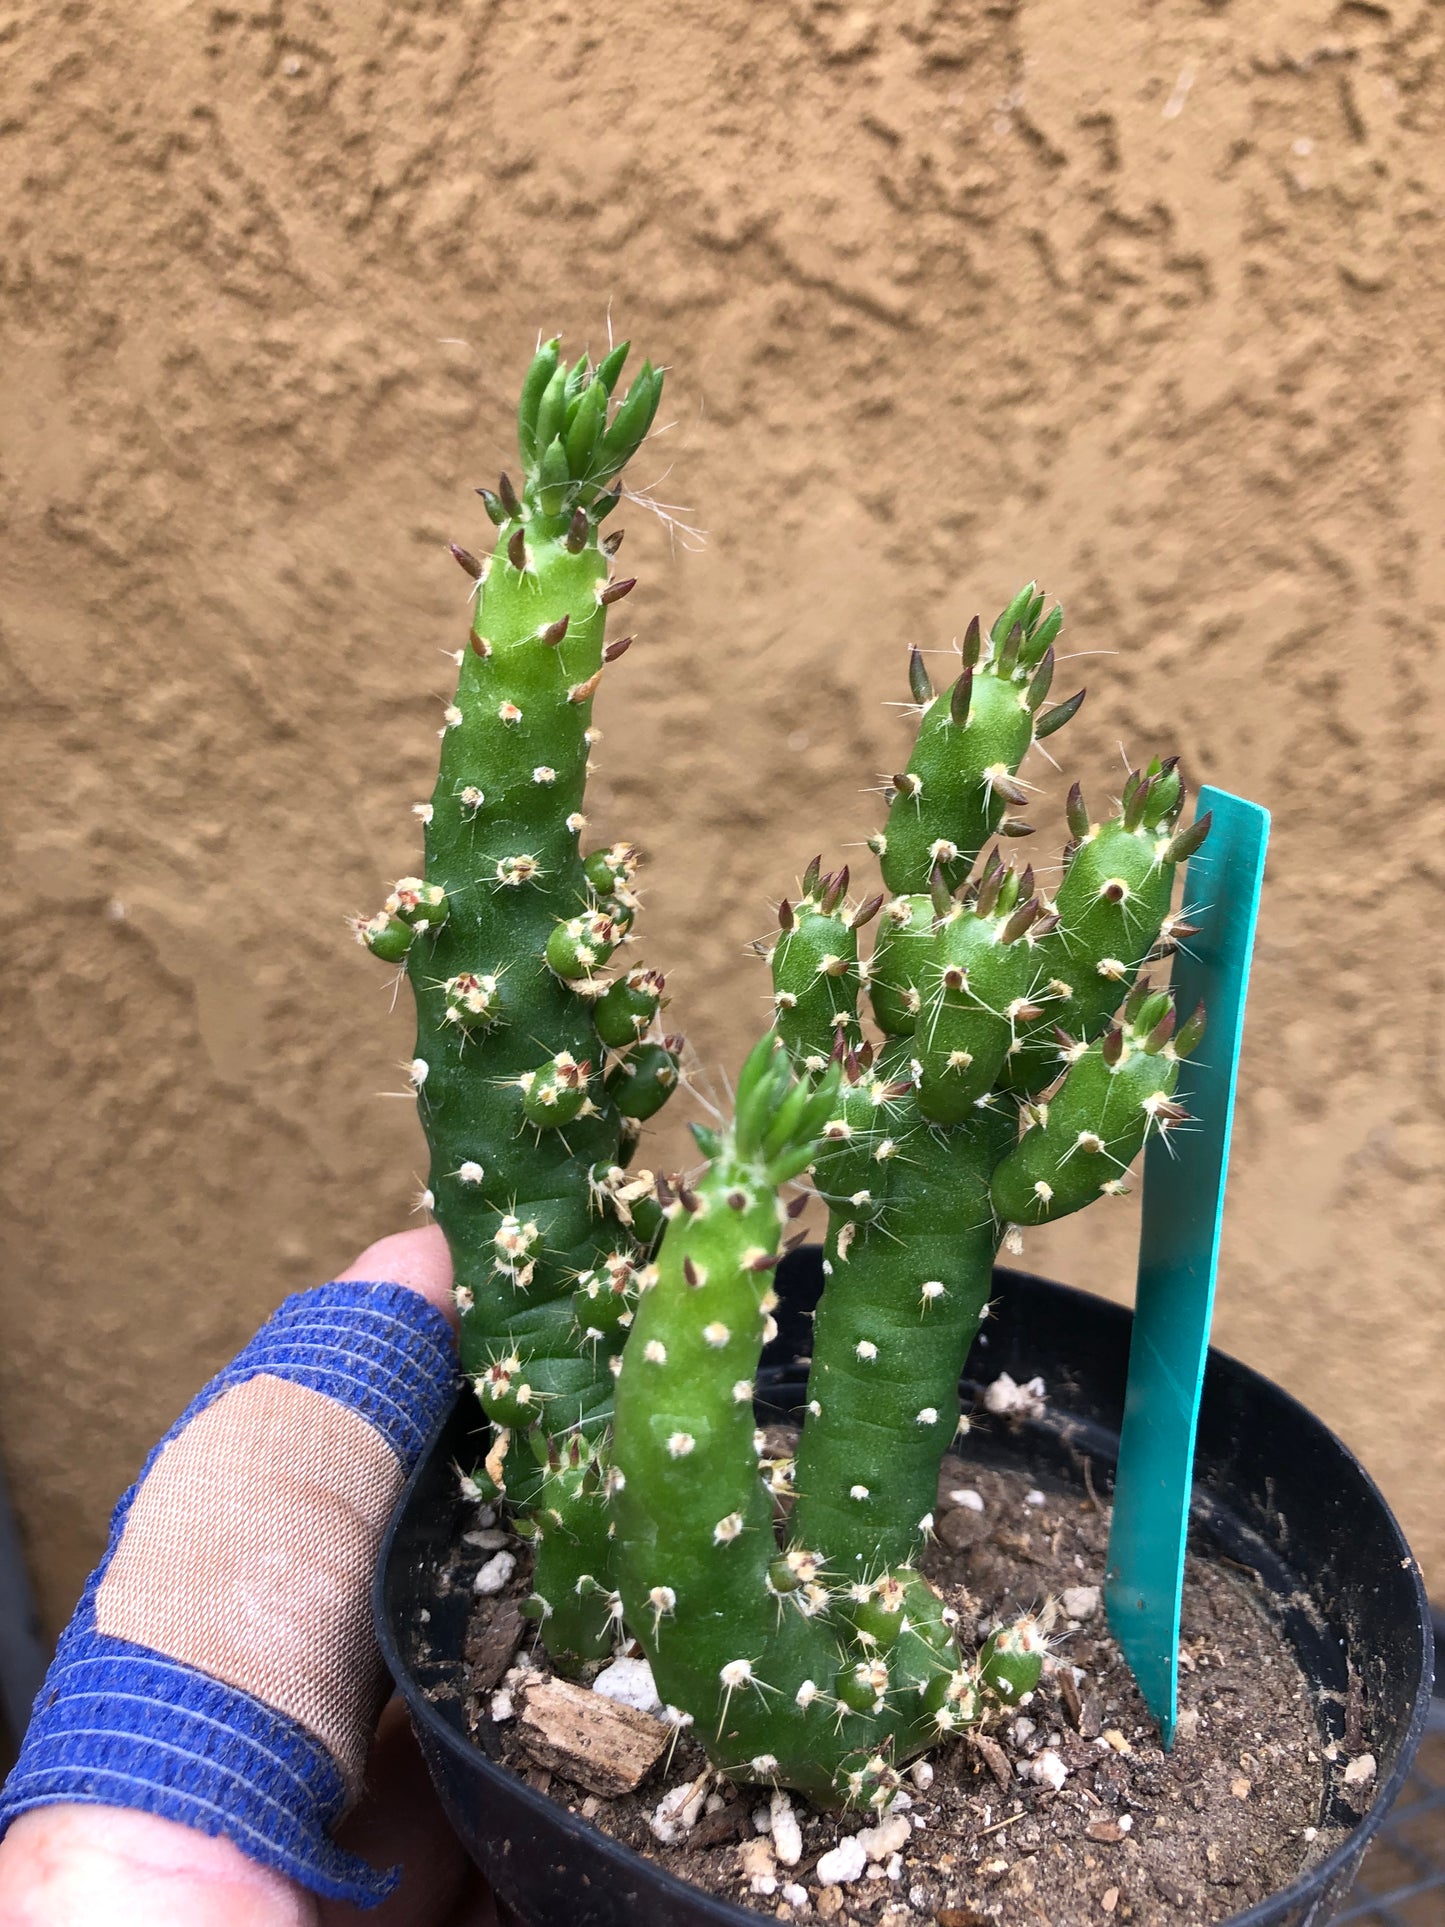 Austrocylindropuntia Cactus Gumbi Mini Eve's Needle 4"Tall #40G